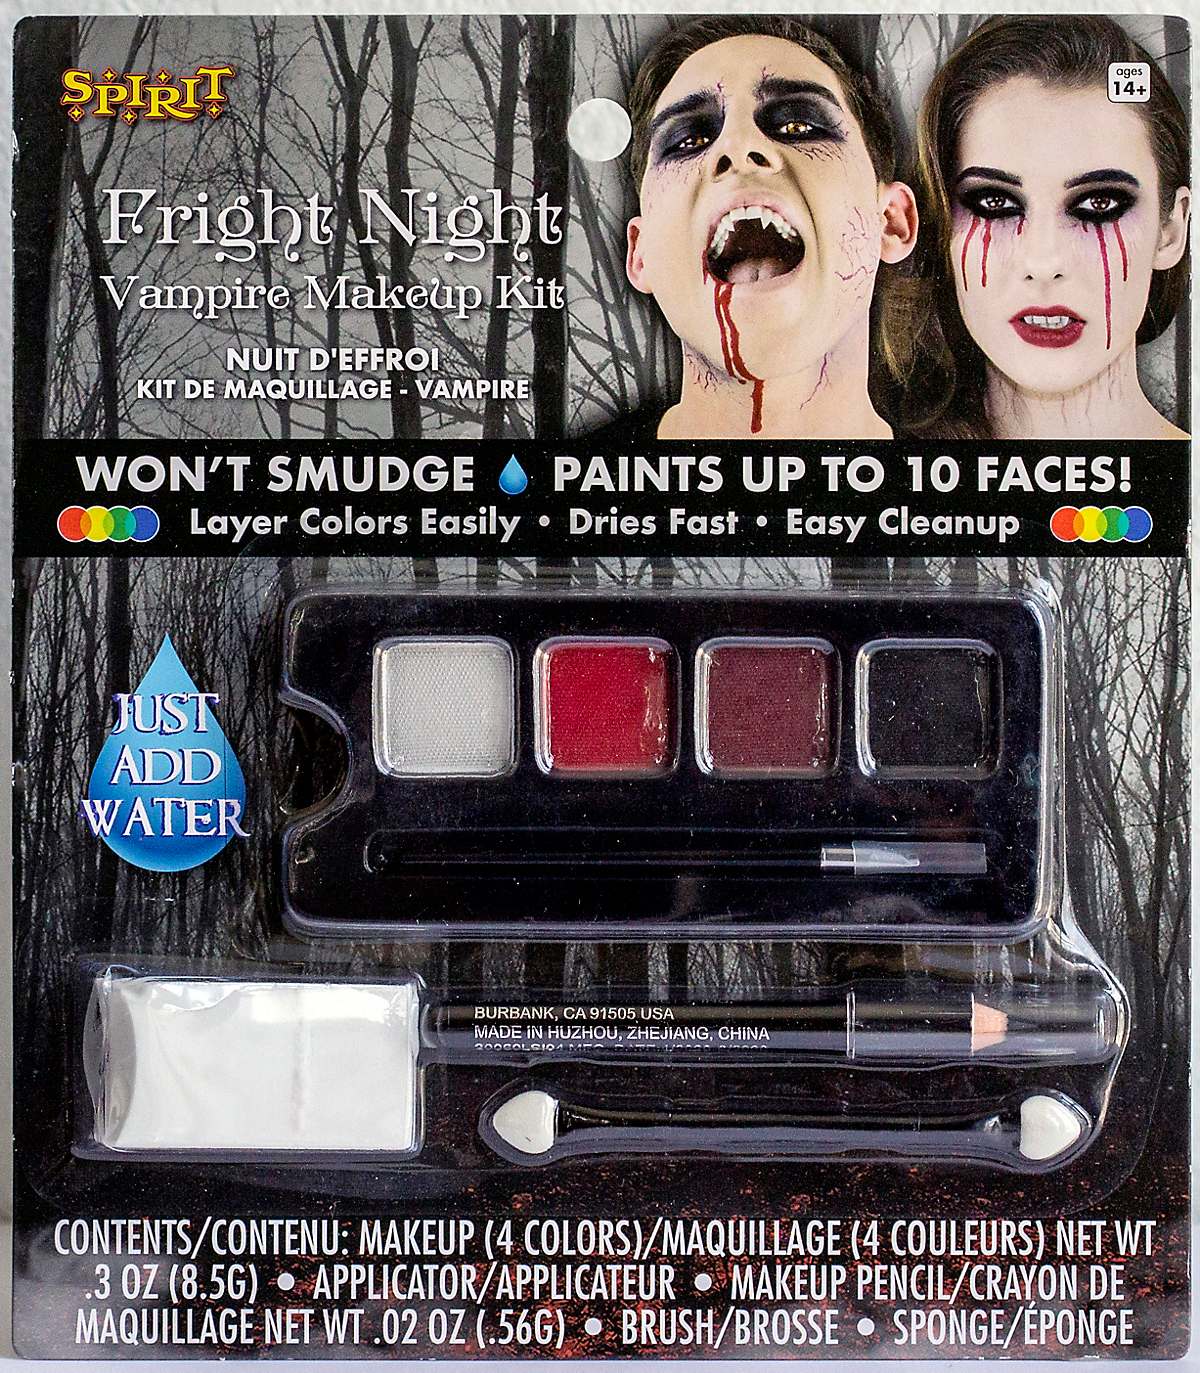 Vampire makeup character kit